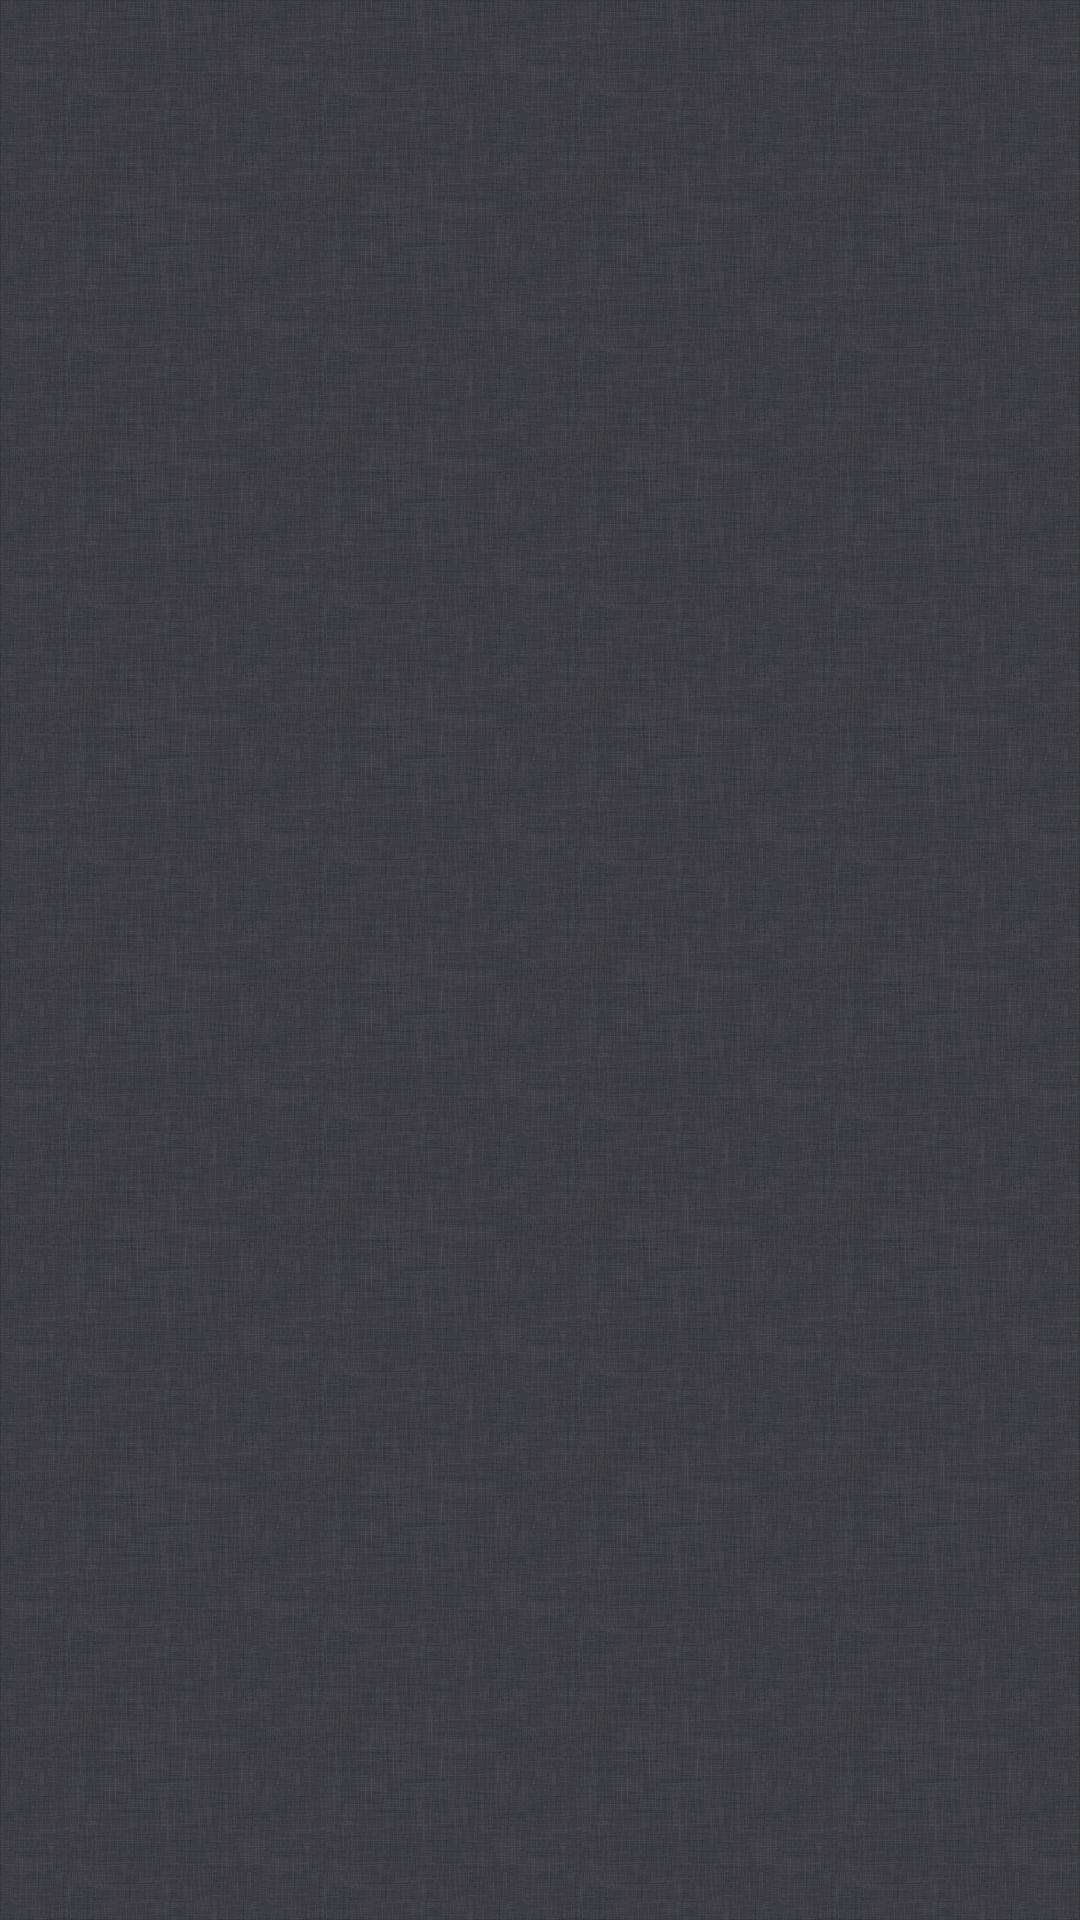 Iphone 7 Wallpaper Grey